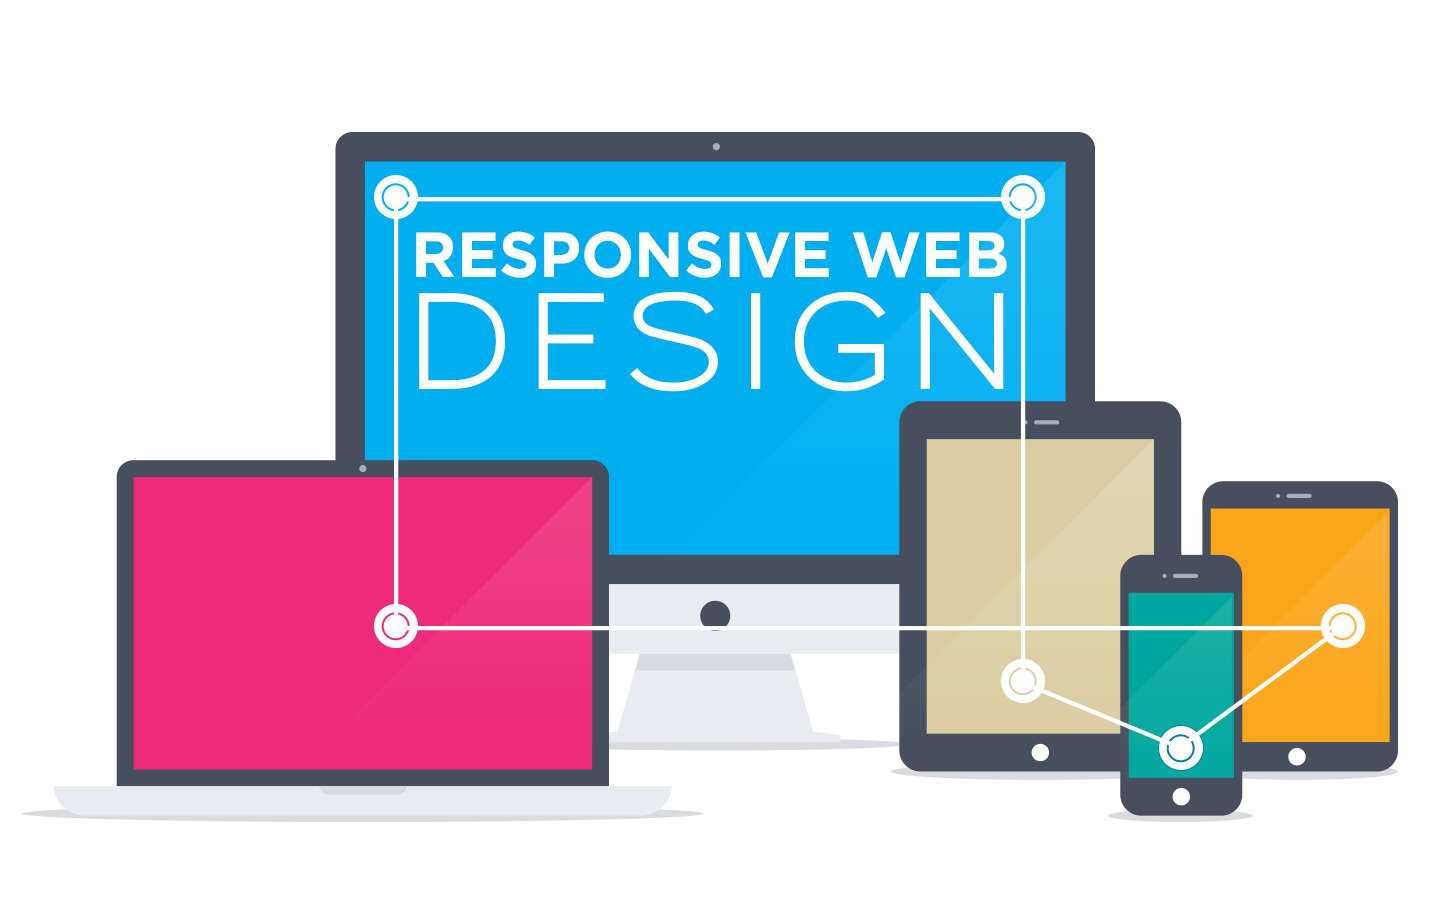 responsive designs